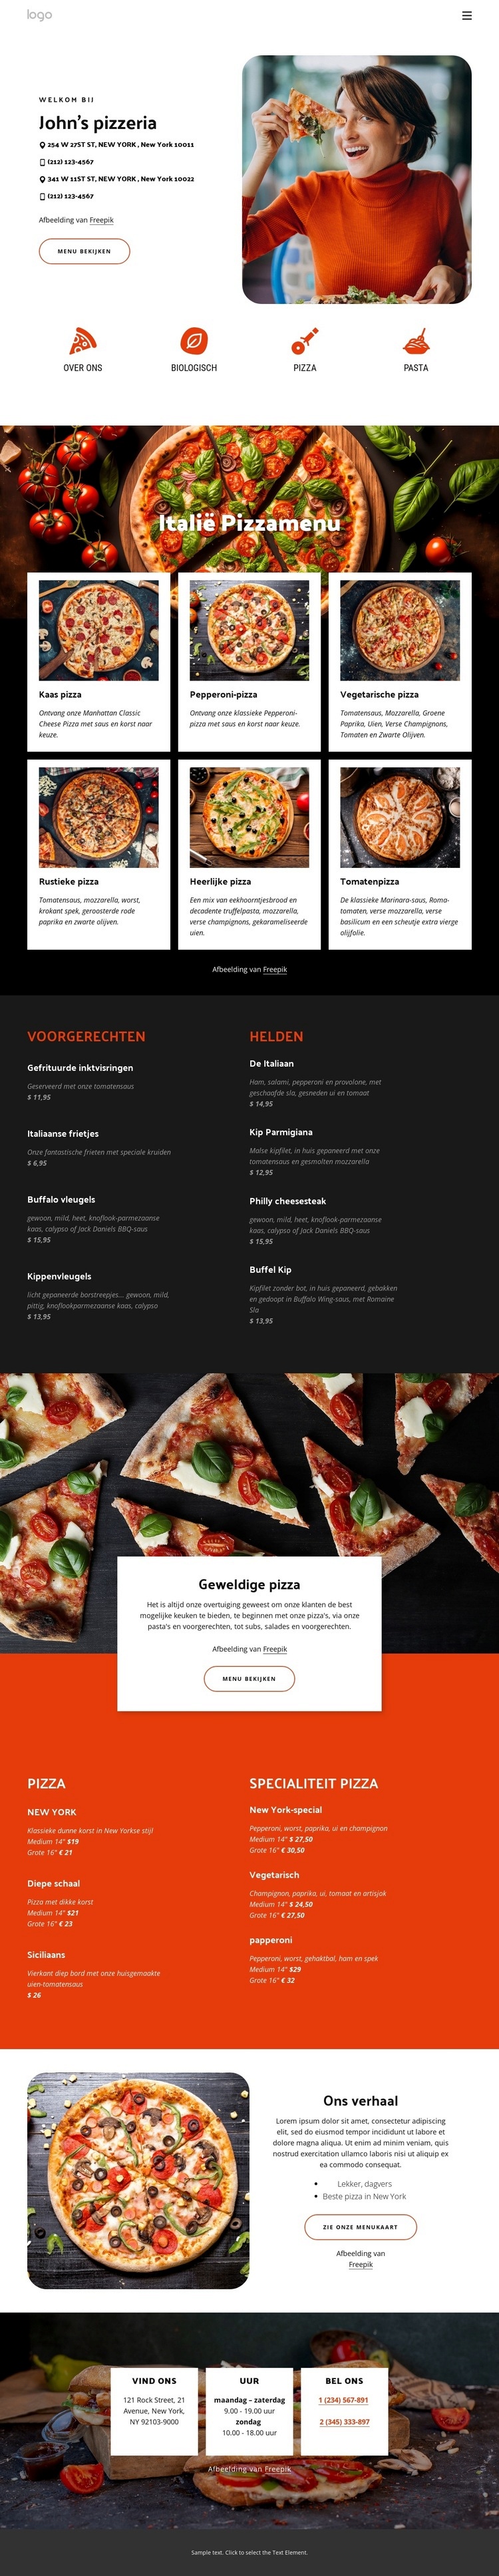 Pizzeria Website mockup